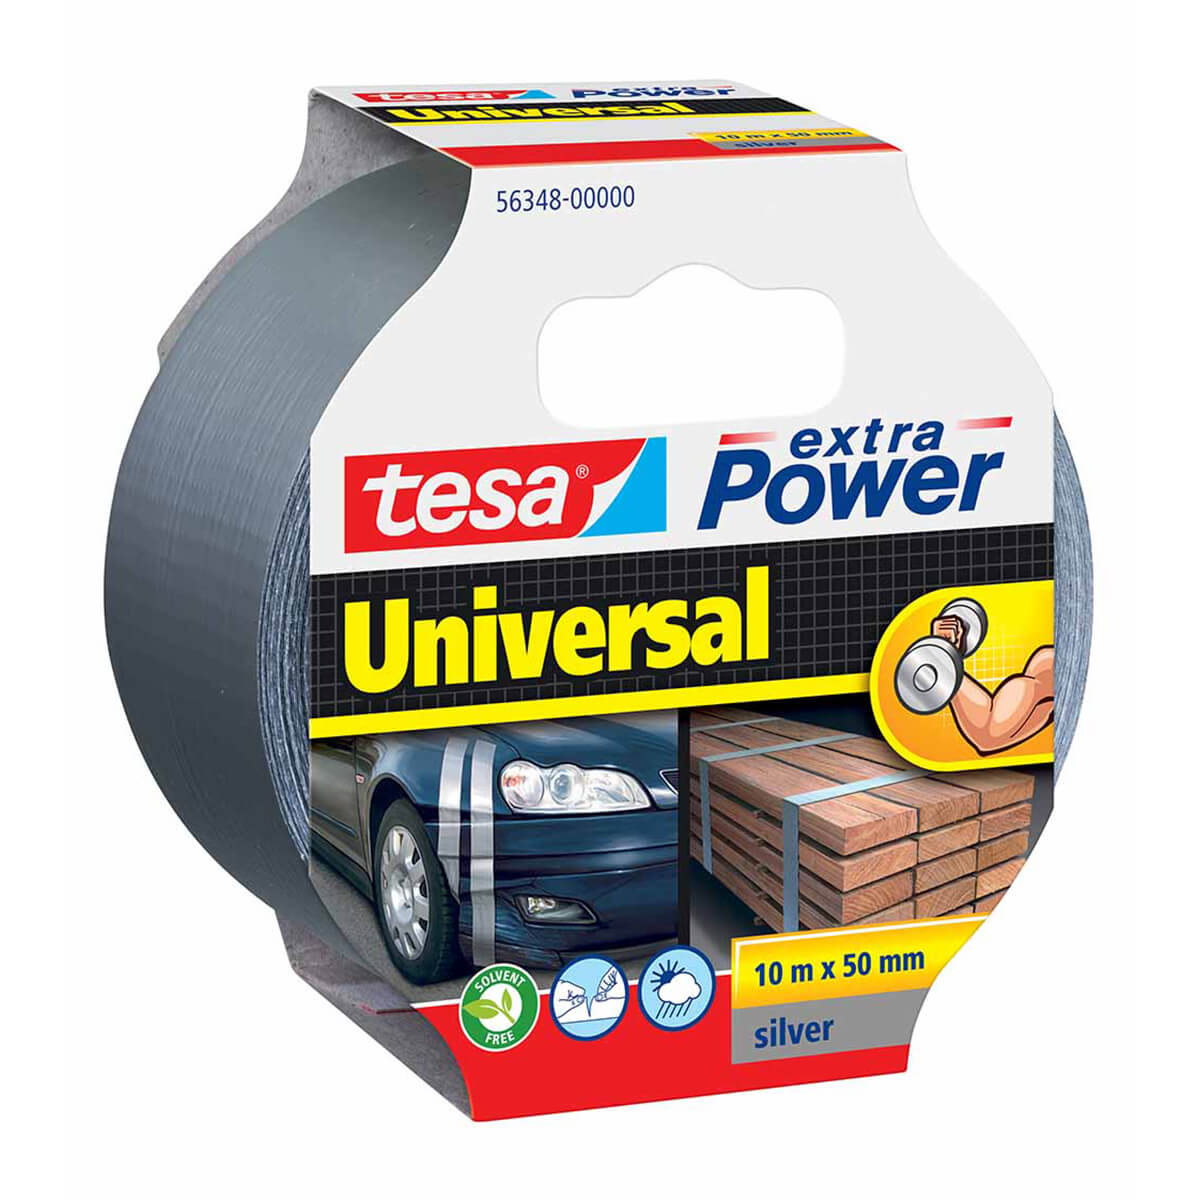 tesa duct tape tesa® extra Power Universal silver